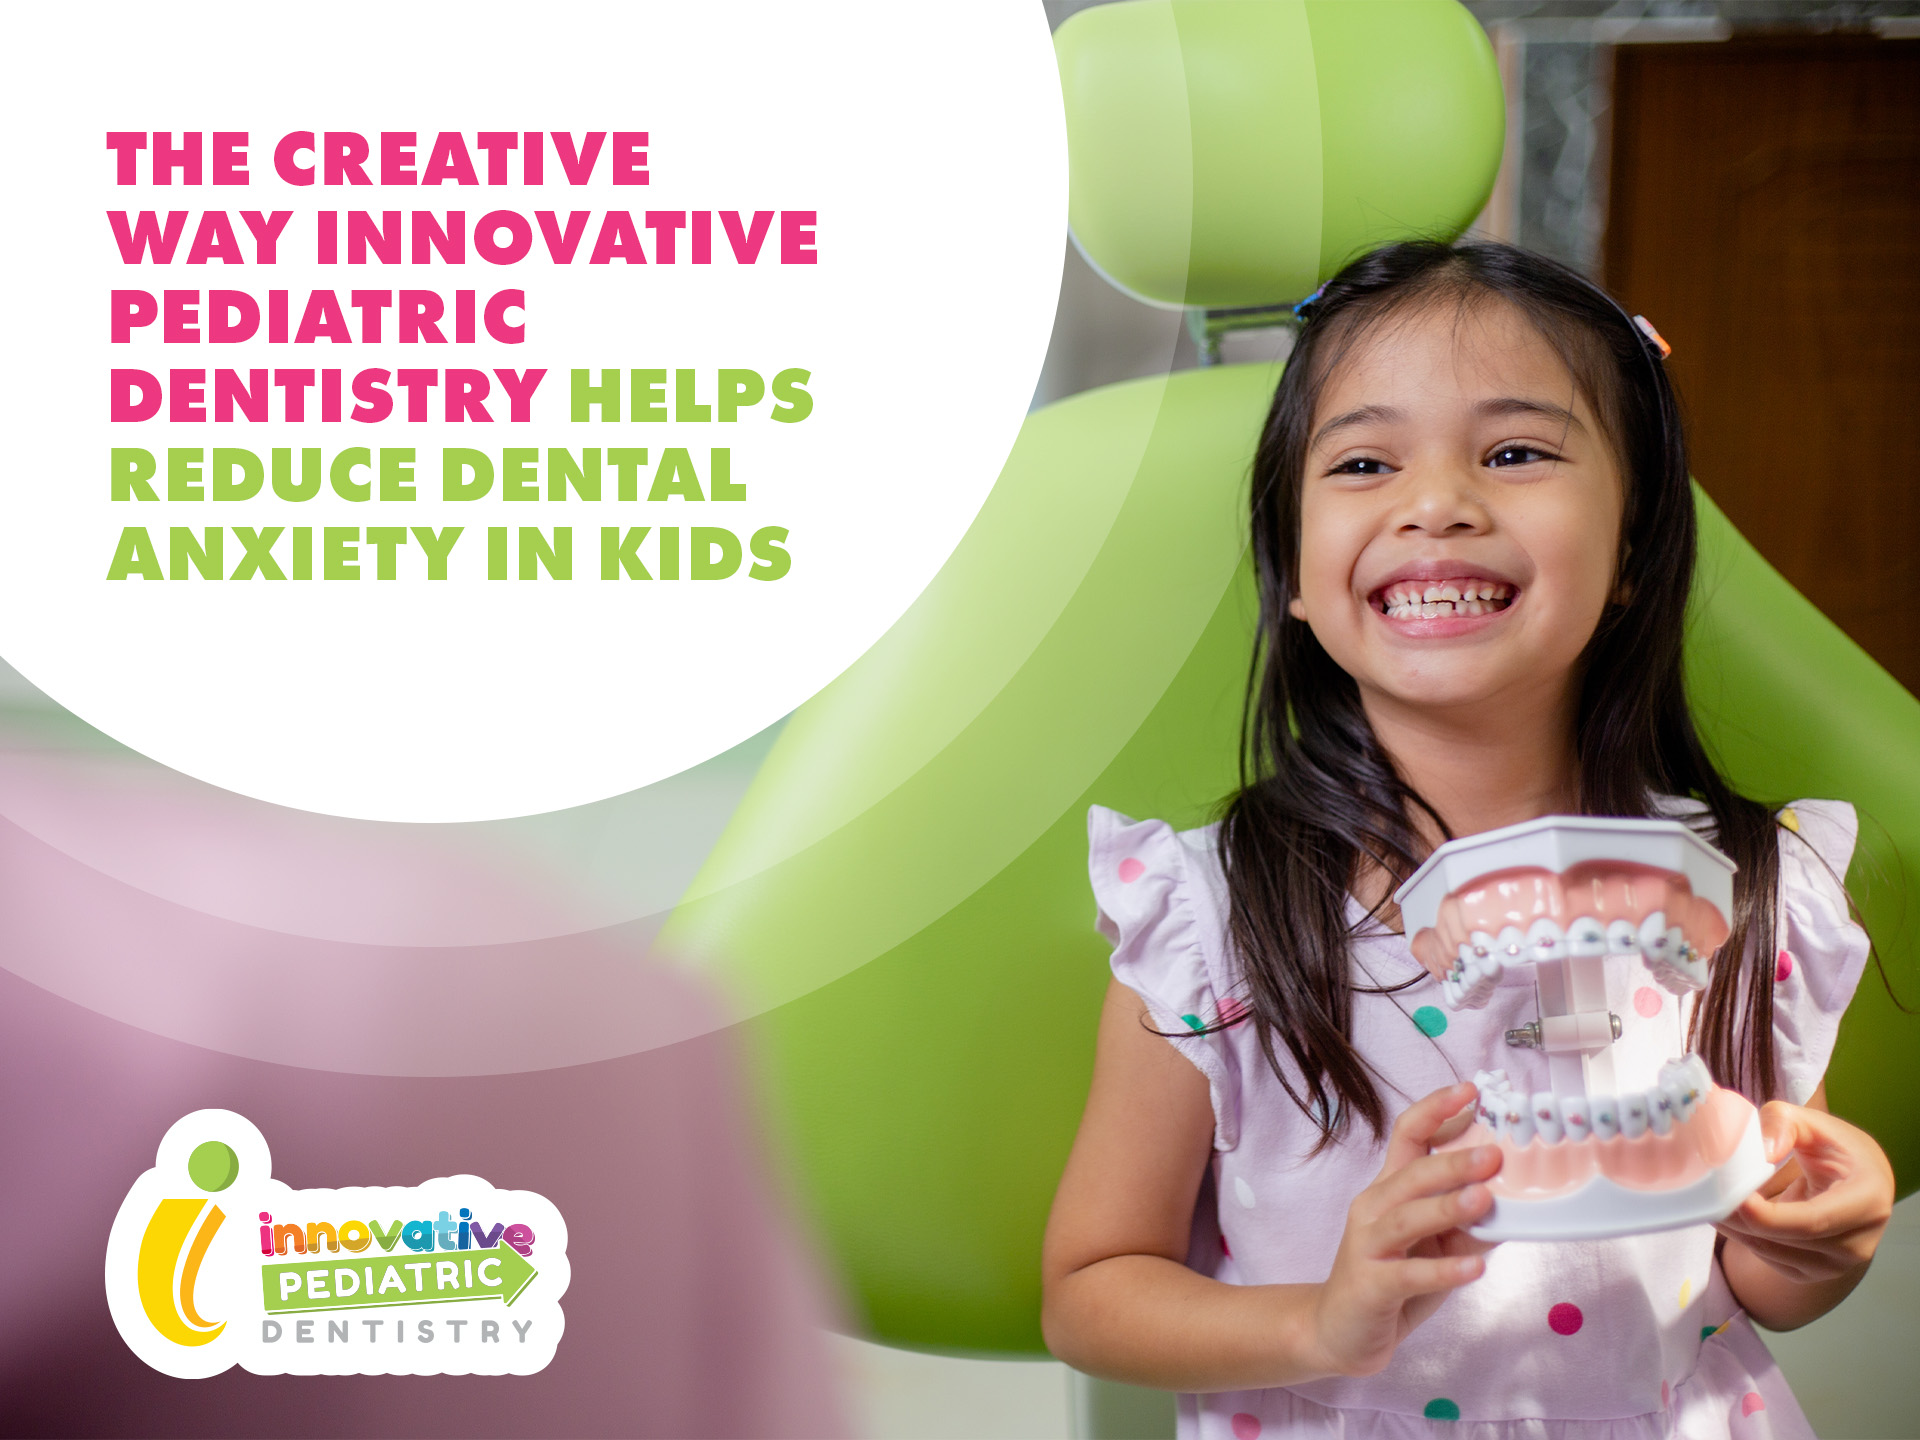 The Creative Way Innovative Pediatric Dentistry Helps Reduce Dental Anxiety in Kids